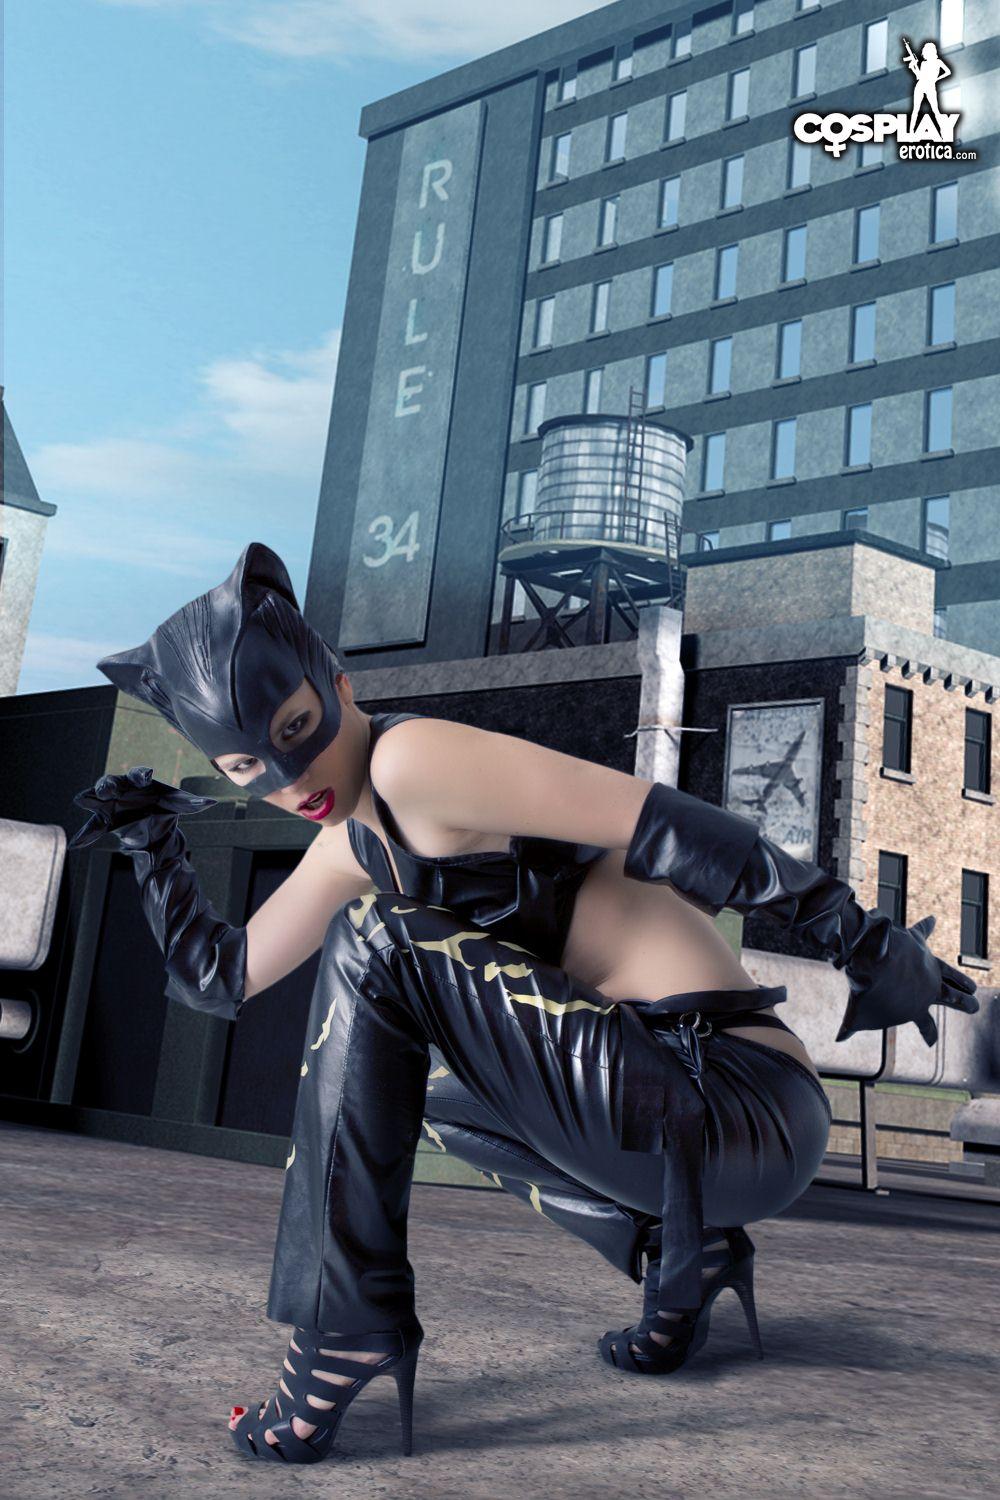 Sexy cosplayer cassie si veste come catwoman
 #53704458